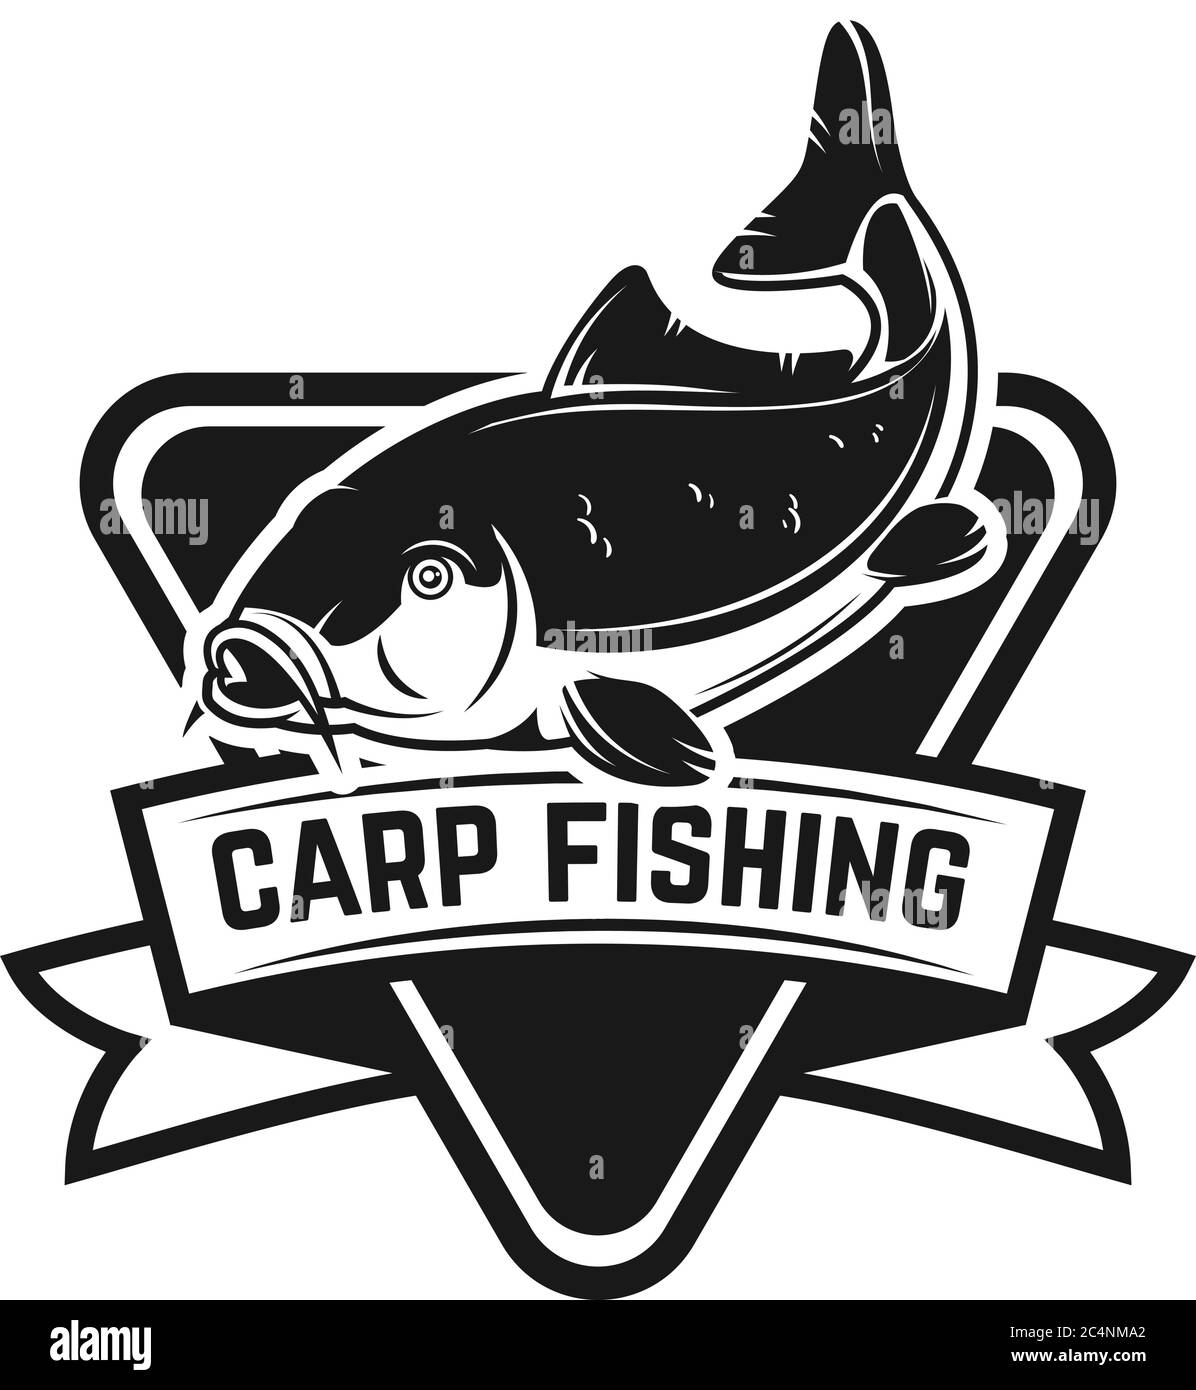 Carp fishing Black and White Stock Photos & Images - Alamy